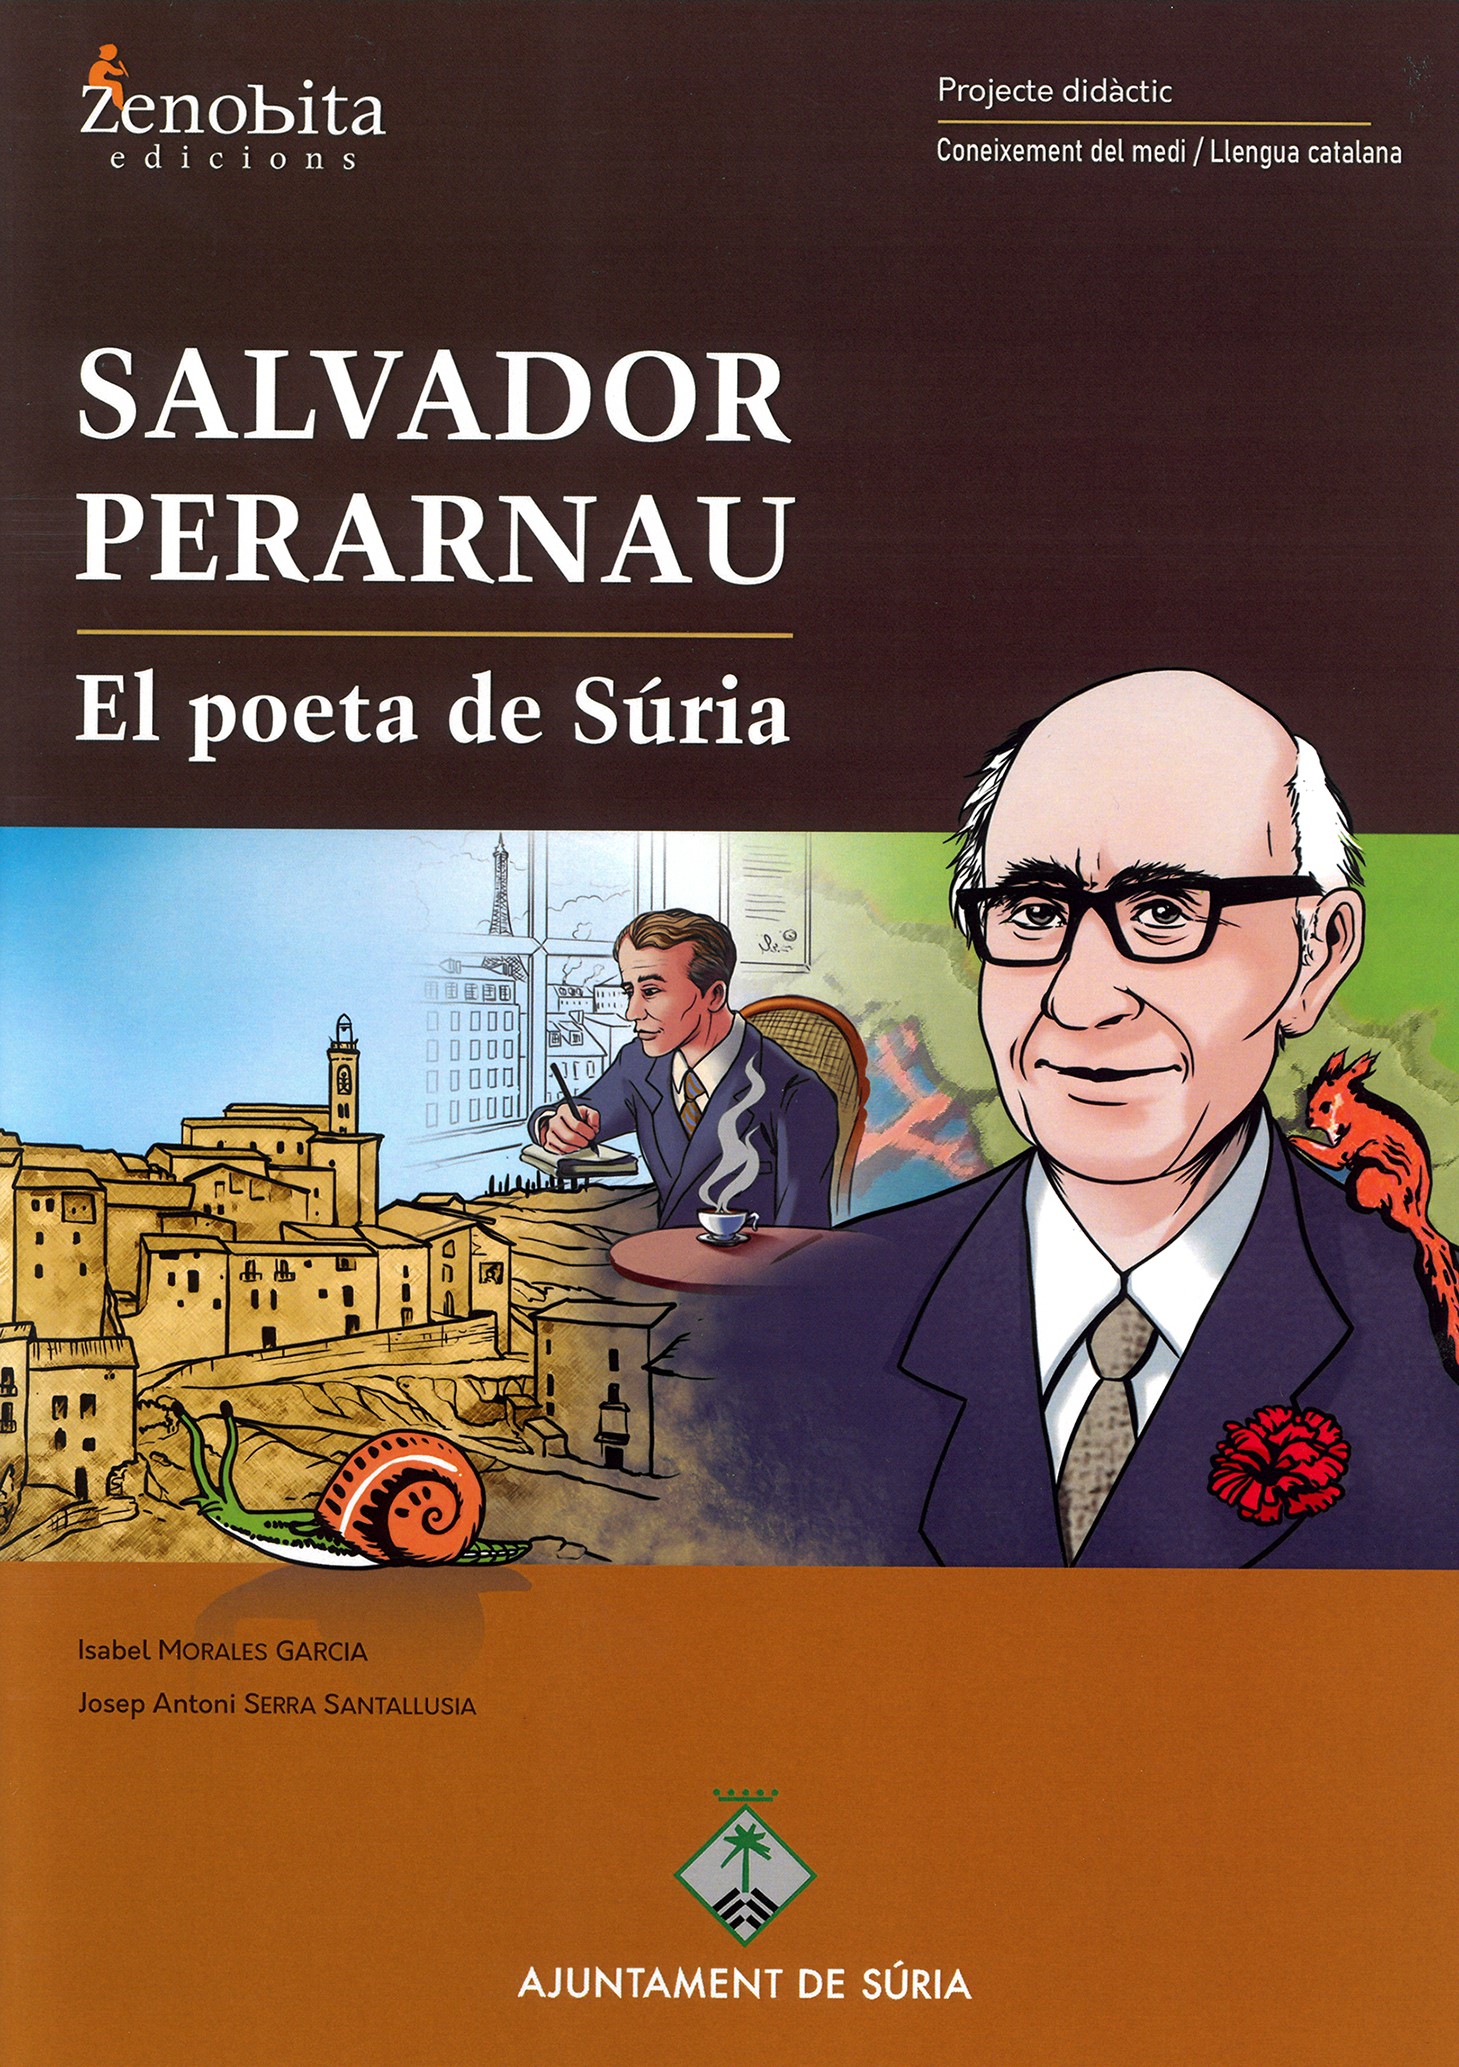 Portada del dossier didÃ ctic 'Salvador Perarnau, el poeta de SÃºria'.